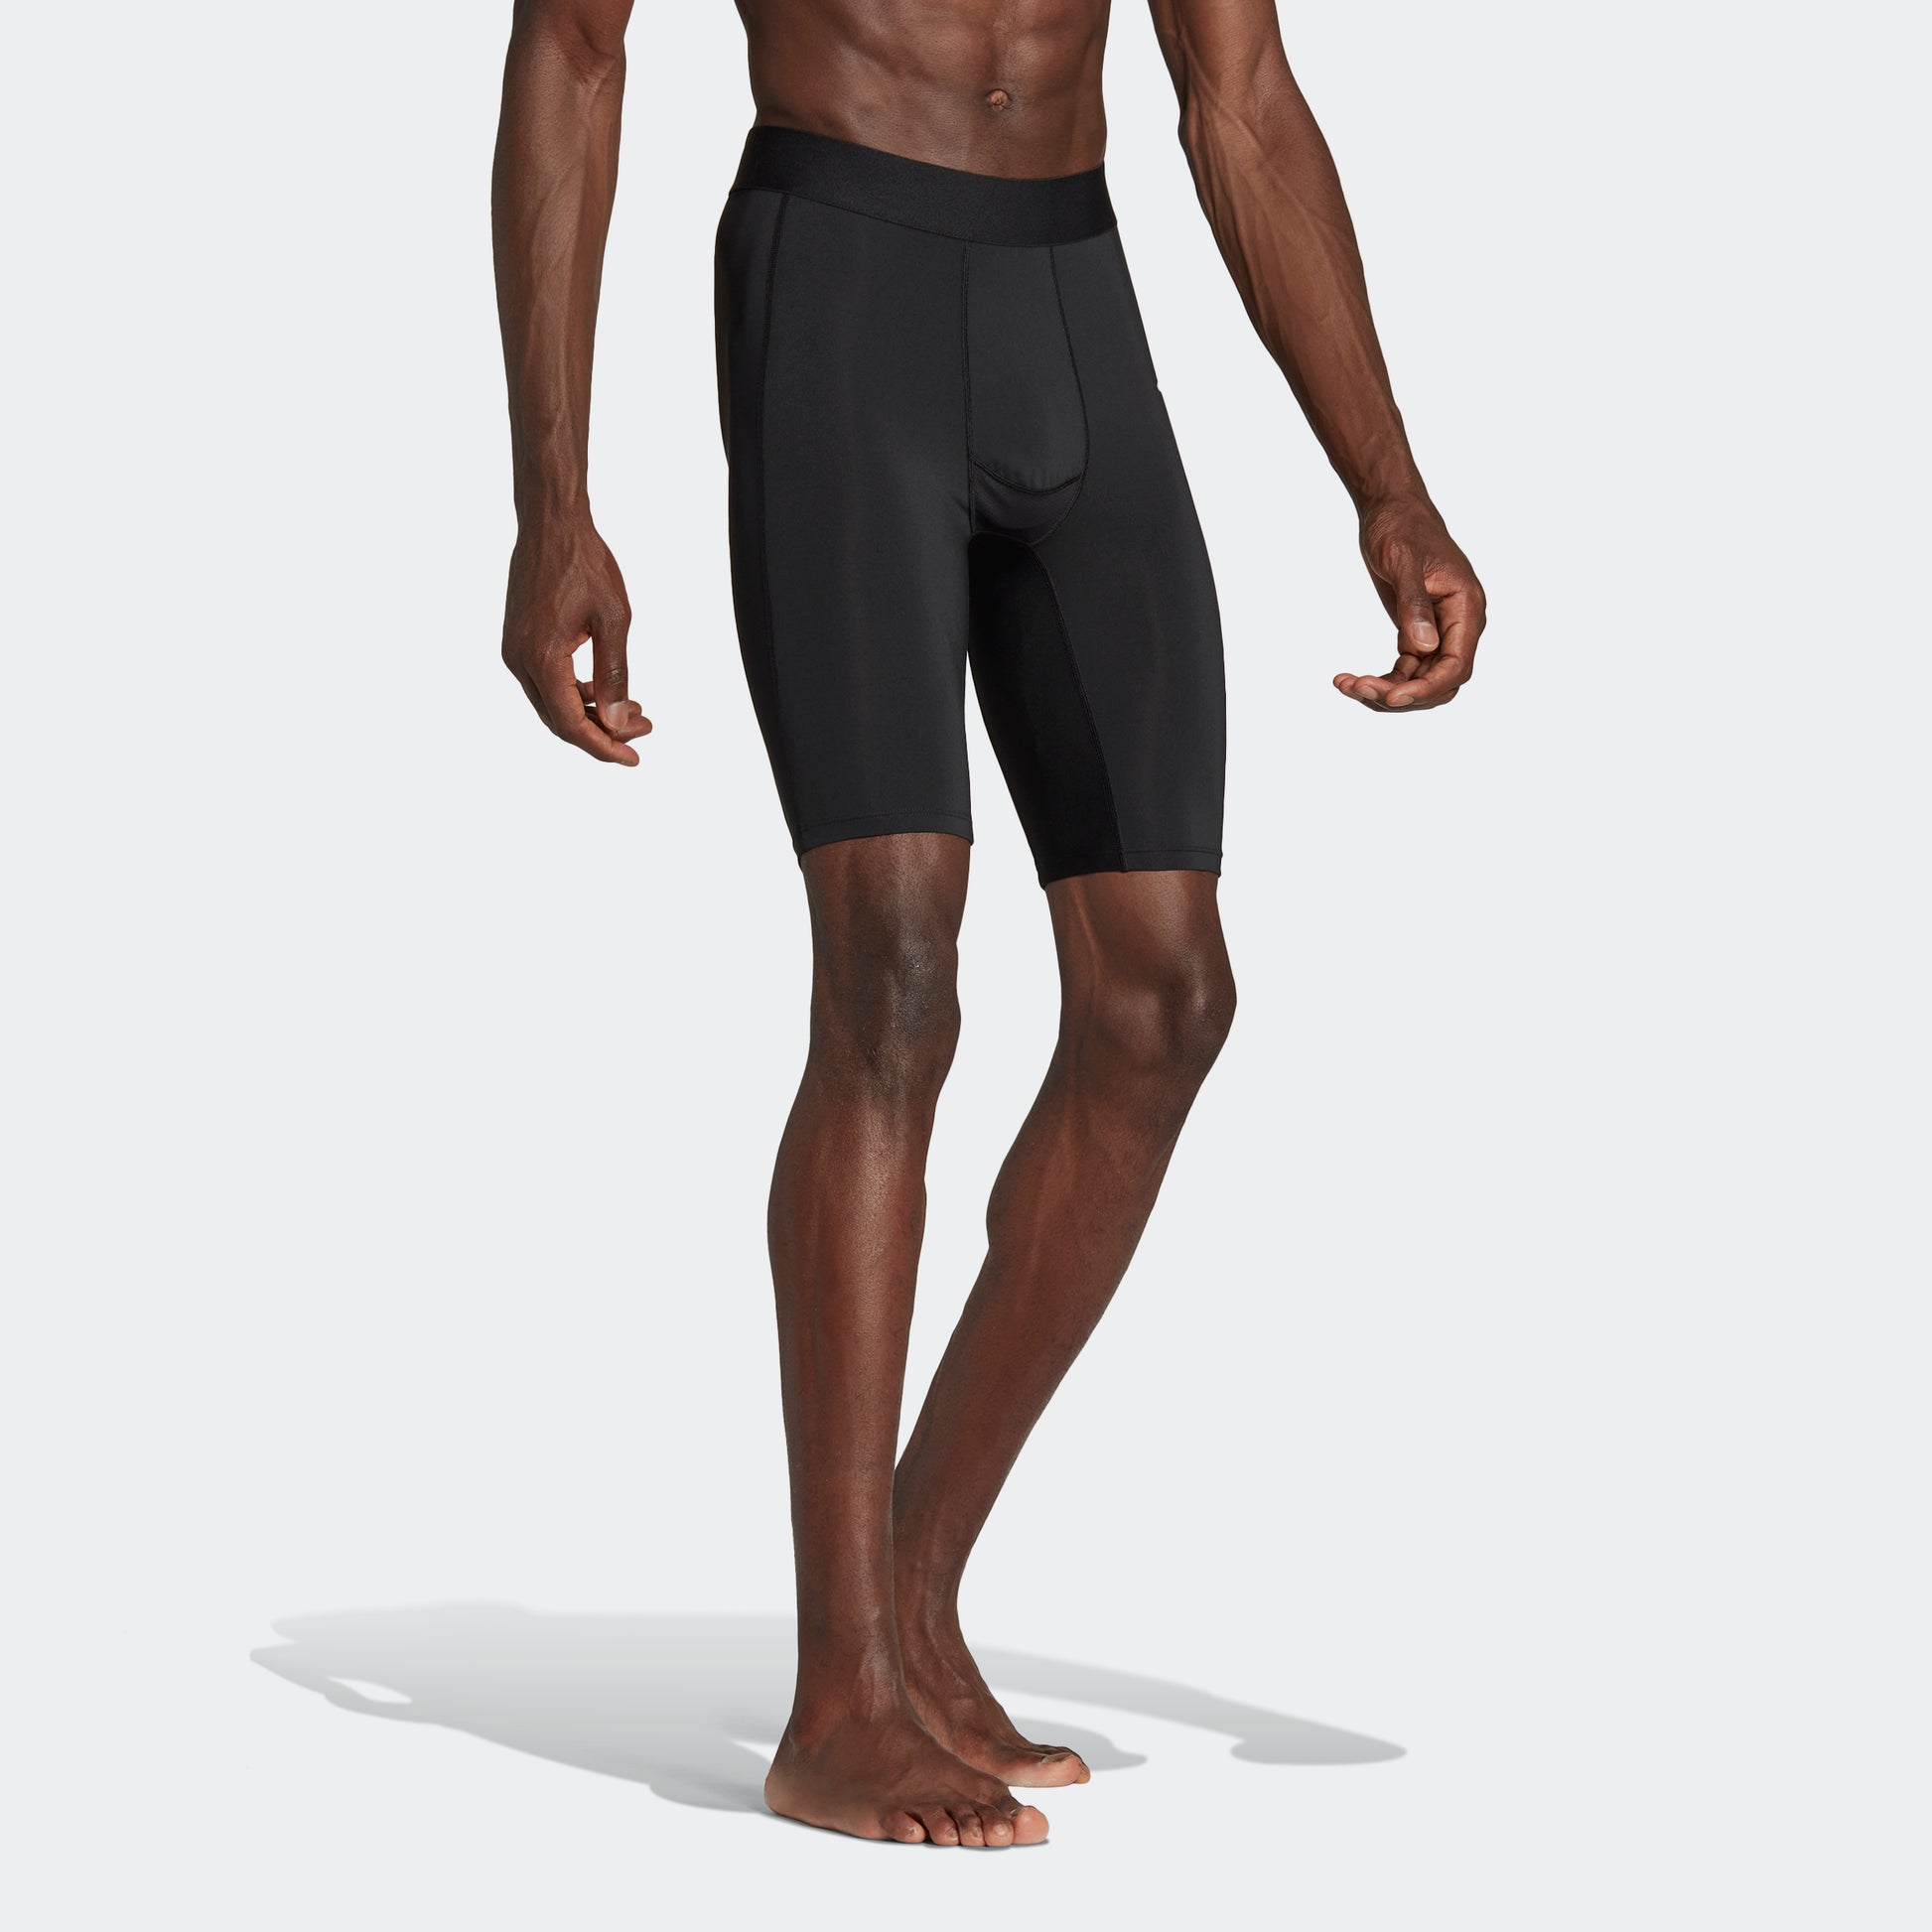  adidas Men's Techfit Short Tights, Black, X-Small